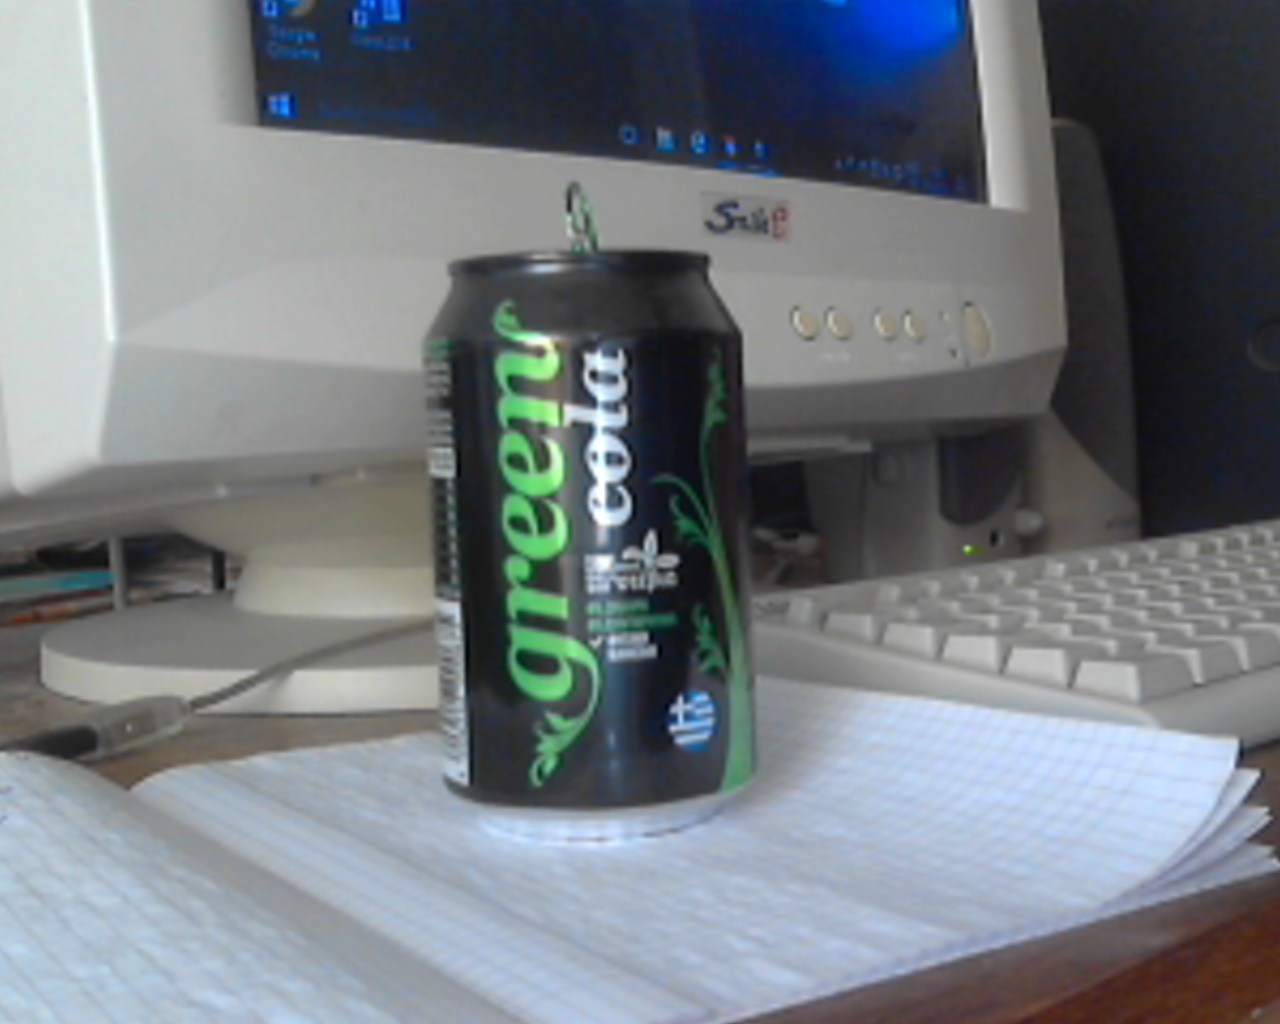 Green Cola